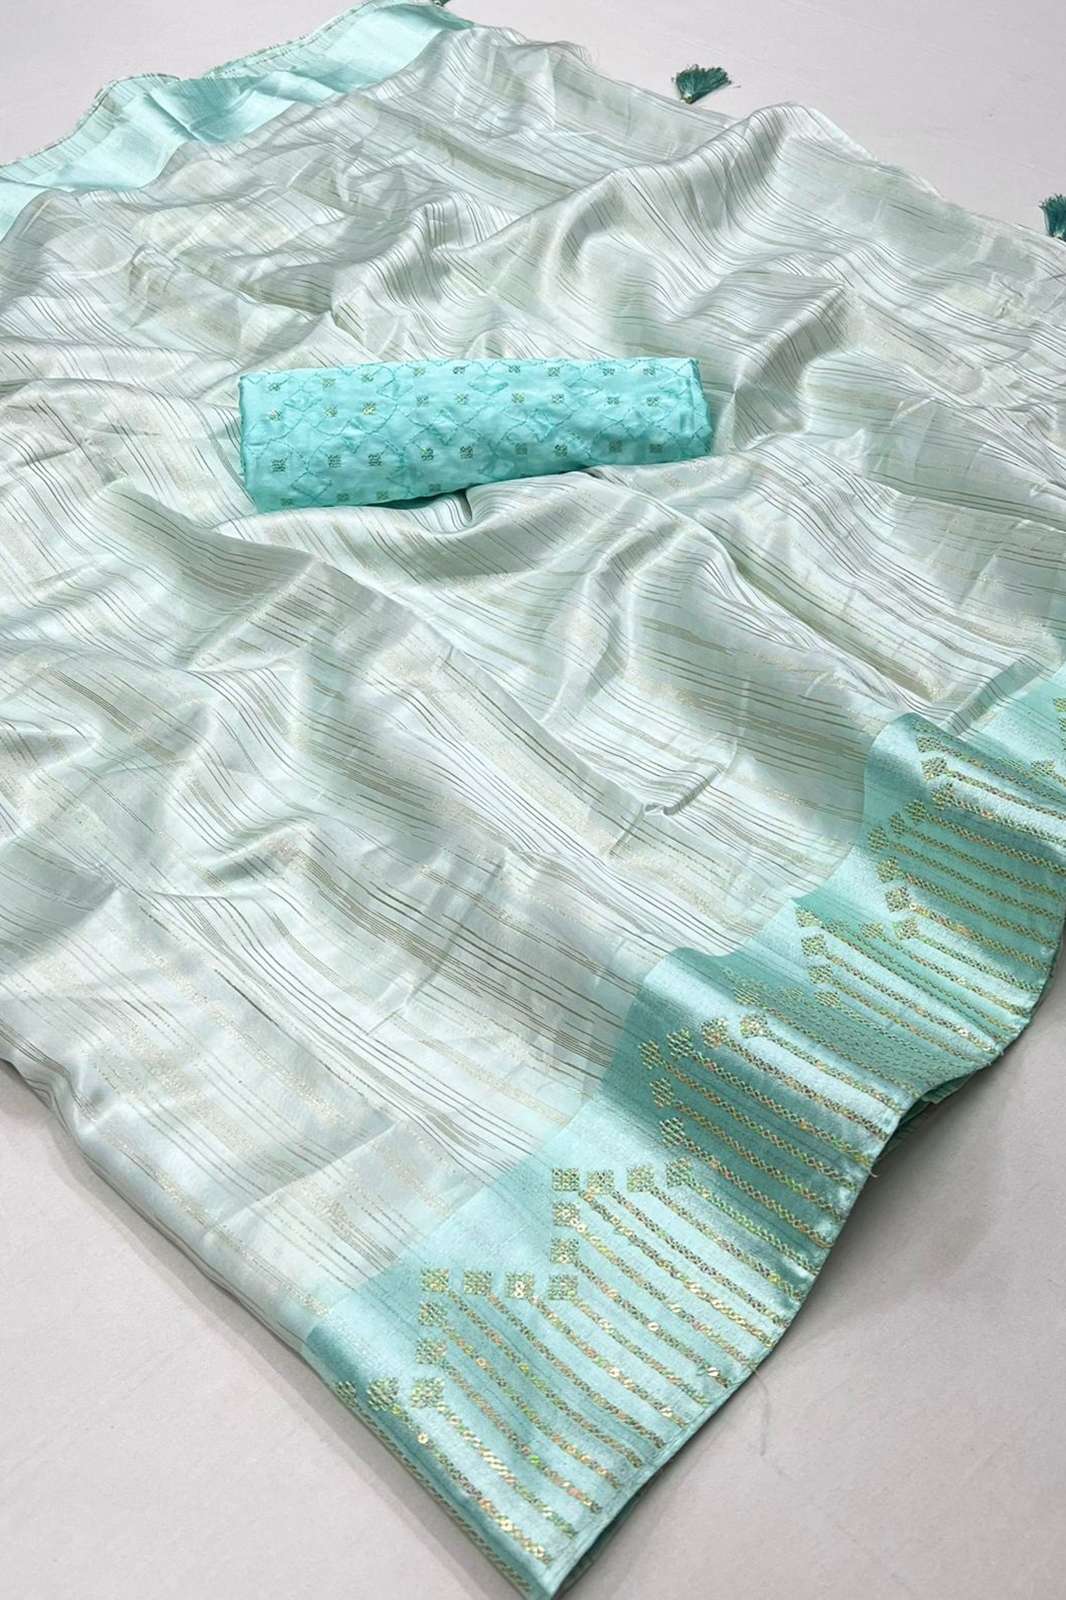 LT Fabrics SAFFRON-2 Organza With Weaving Zari & Fancy Embroidery Blouse in multicolors 